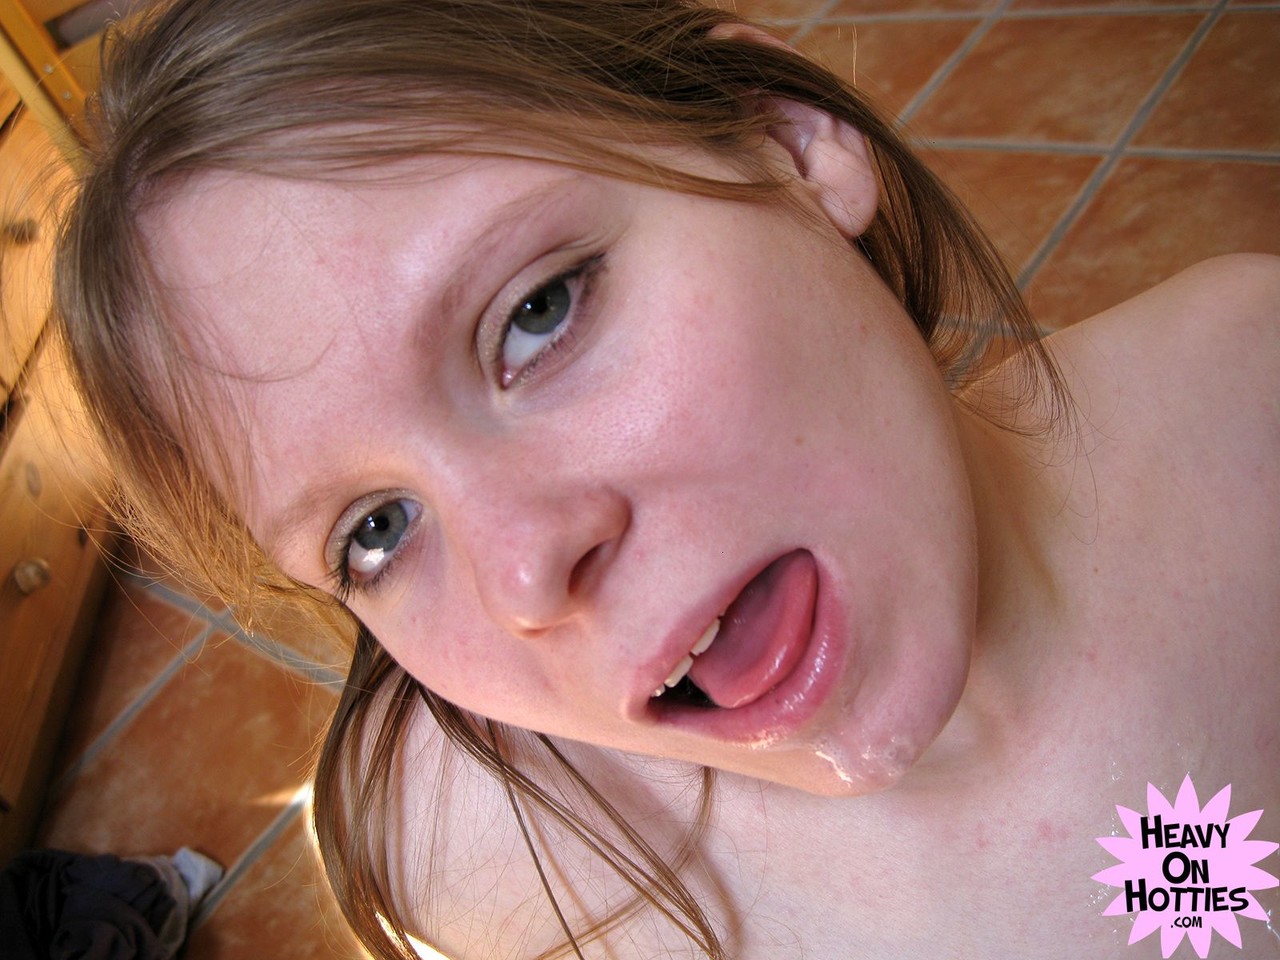 Amateur girl fondles her big natural tits during a POV blowjob foto porno #424293092 | Heavy On Hotties Pics, Caroline, Close Up, porno móvil